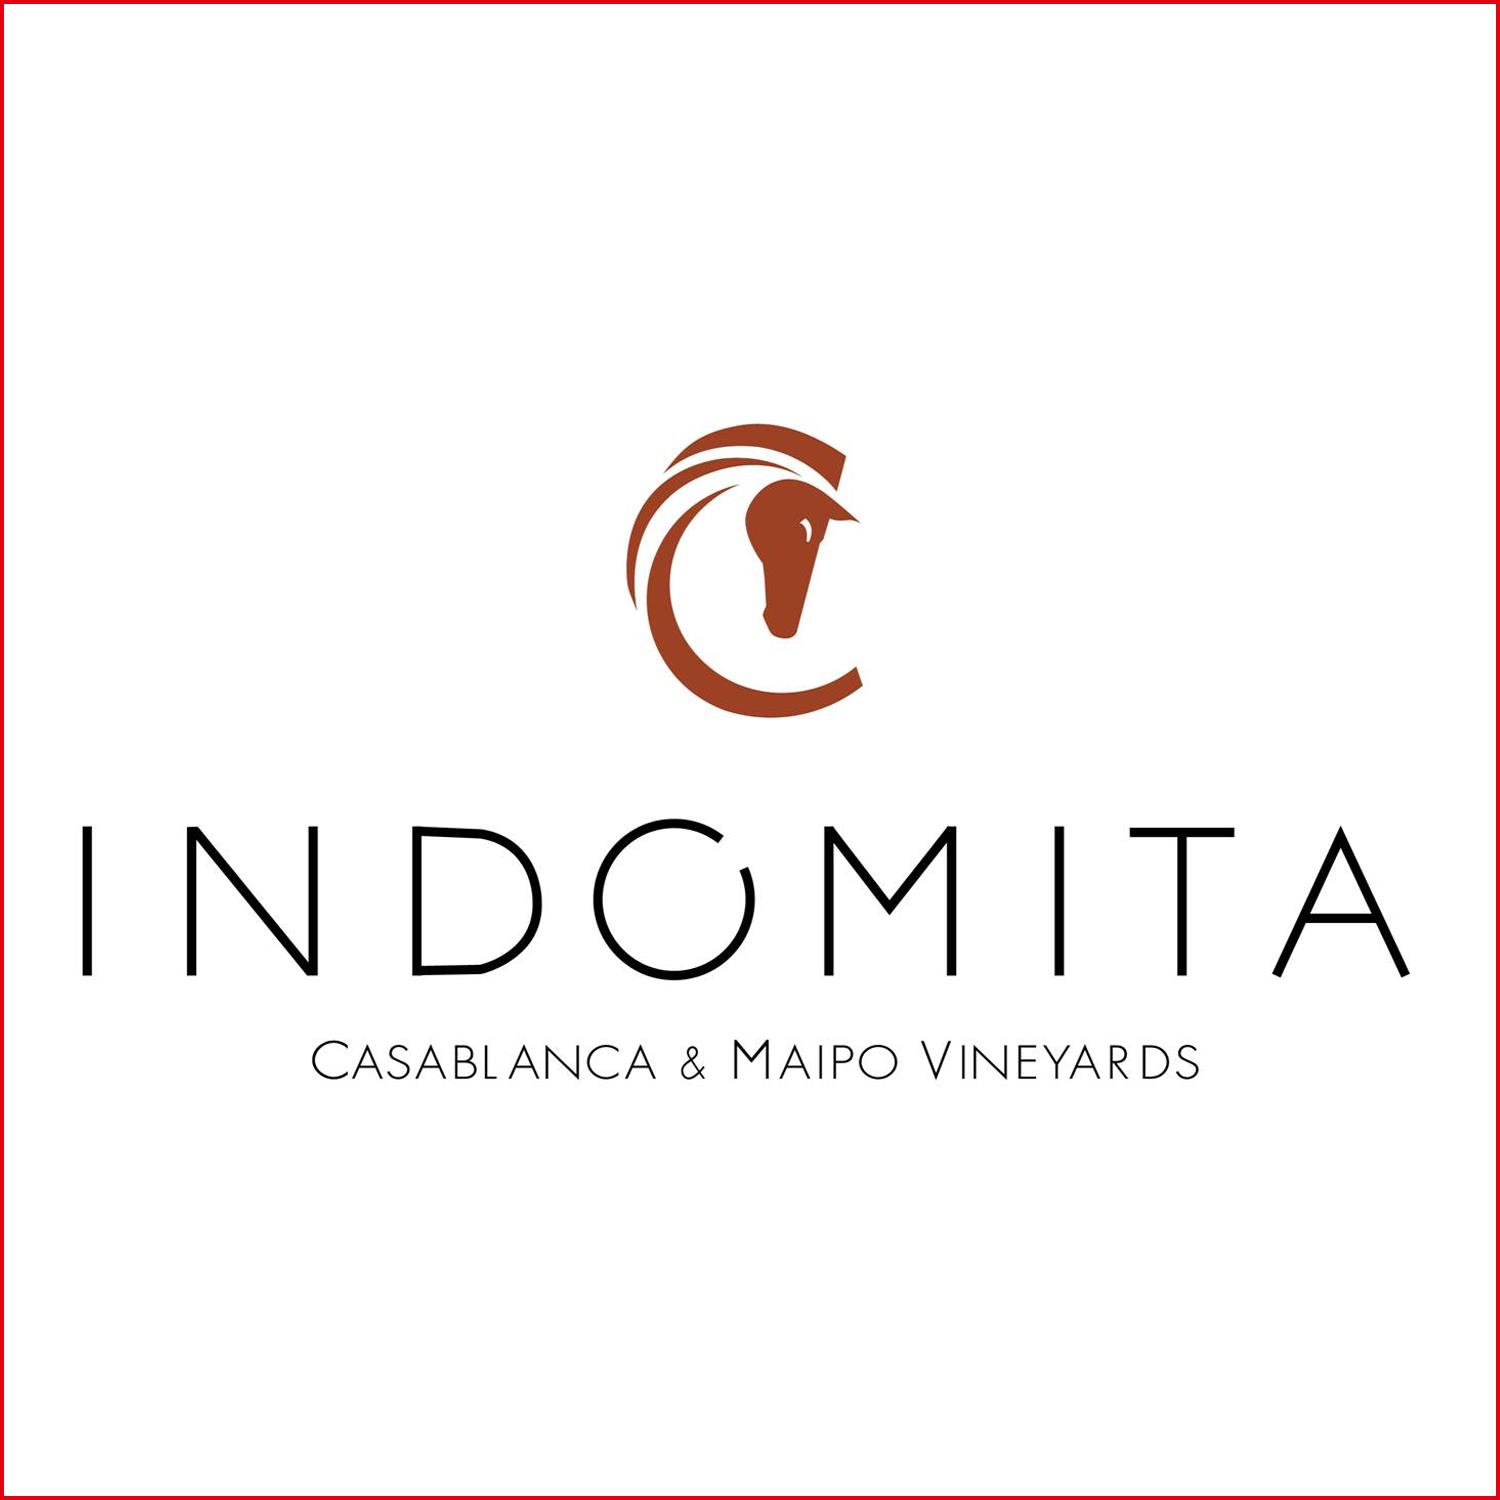 国宝 Indomita